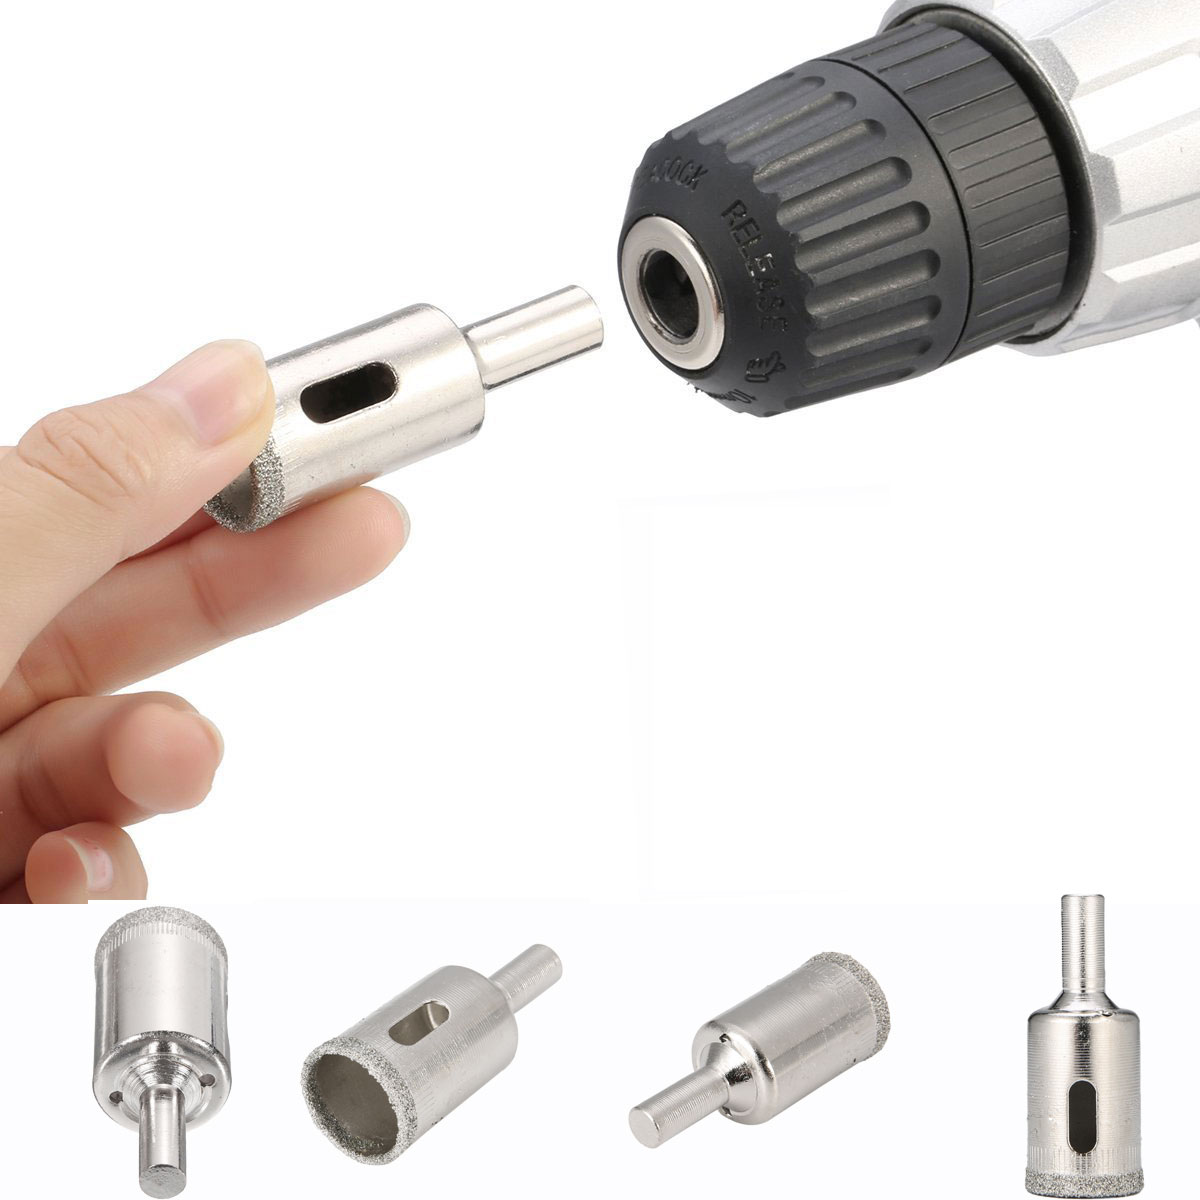 Drillpro-10pcs-Diamond-Drill-Bit-Set-6mm-to-30mm-Diamond-Tools-Hole-Saw-Cutter-for-Glass-1177977-6